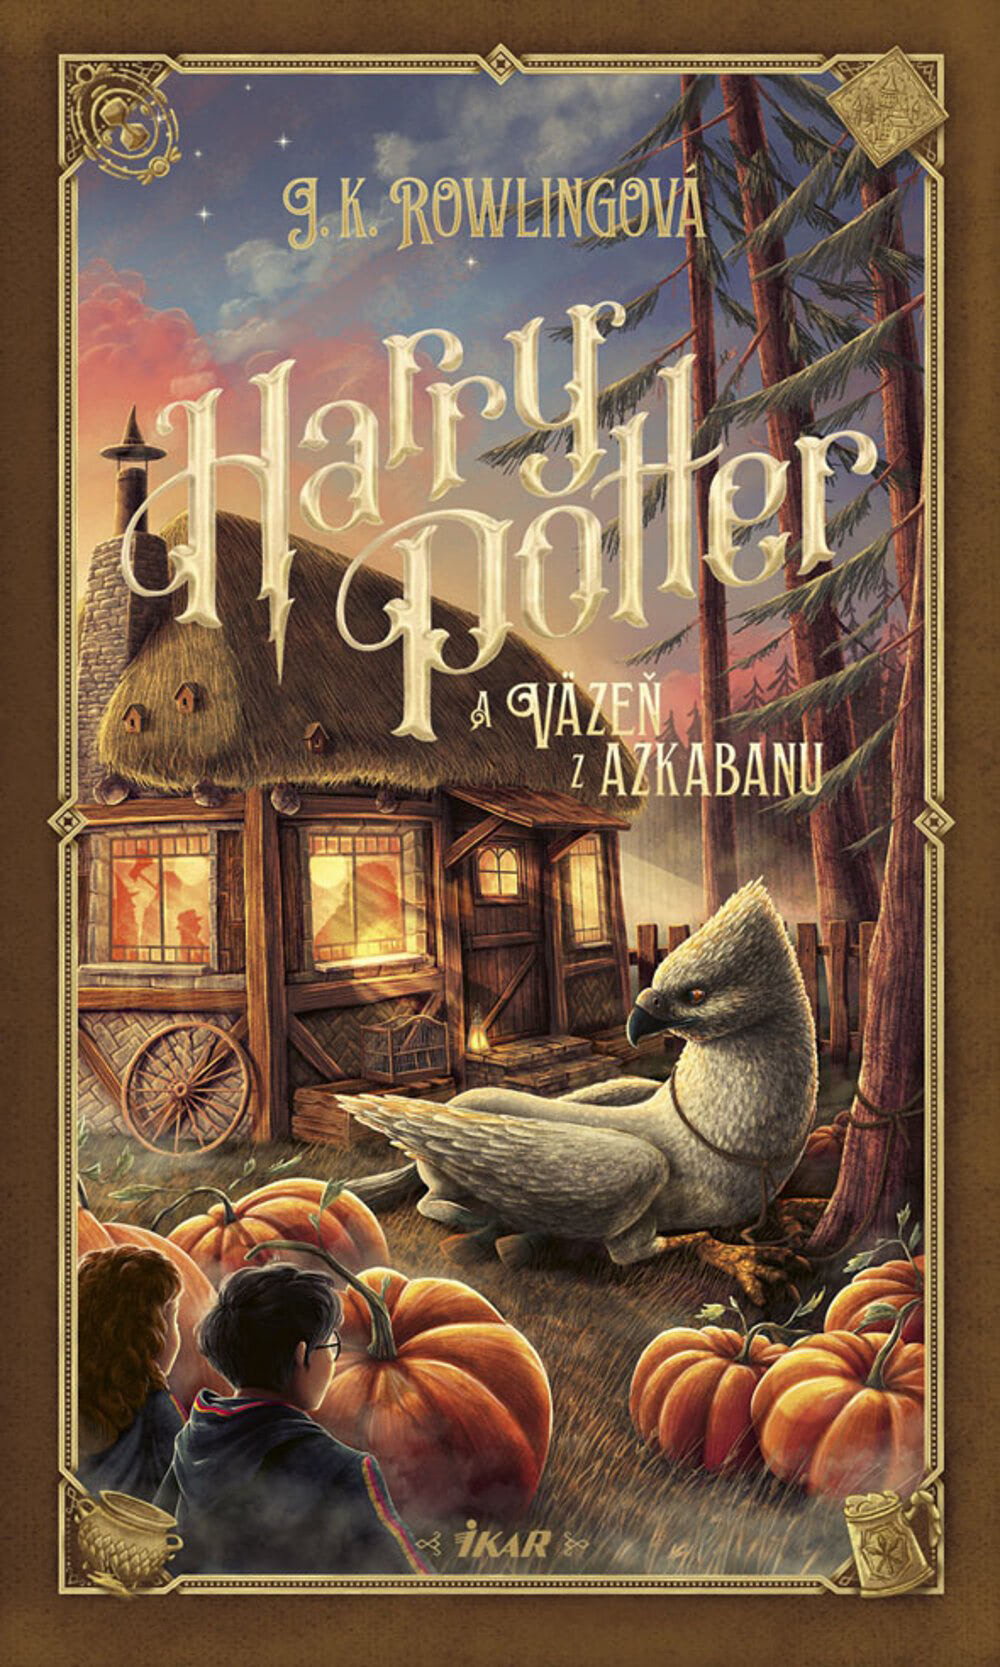 ‘Prisoner of Azkaban’ Slovak edition